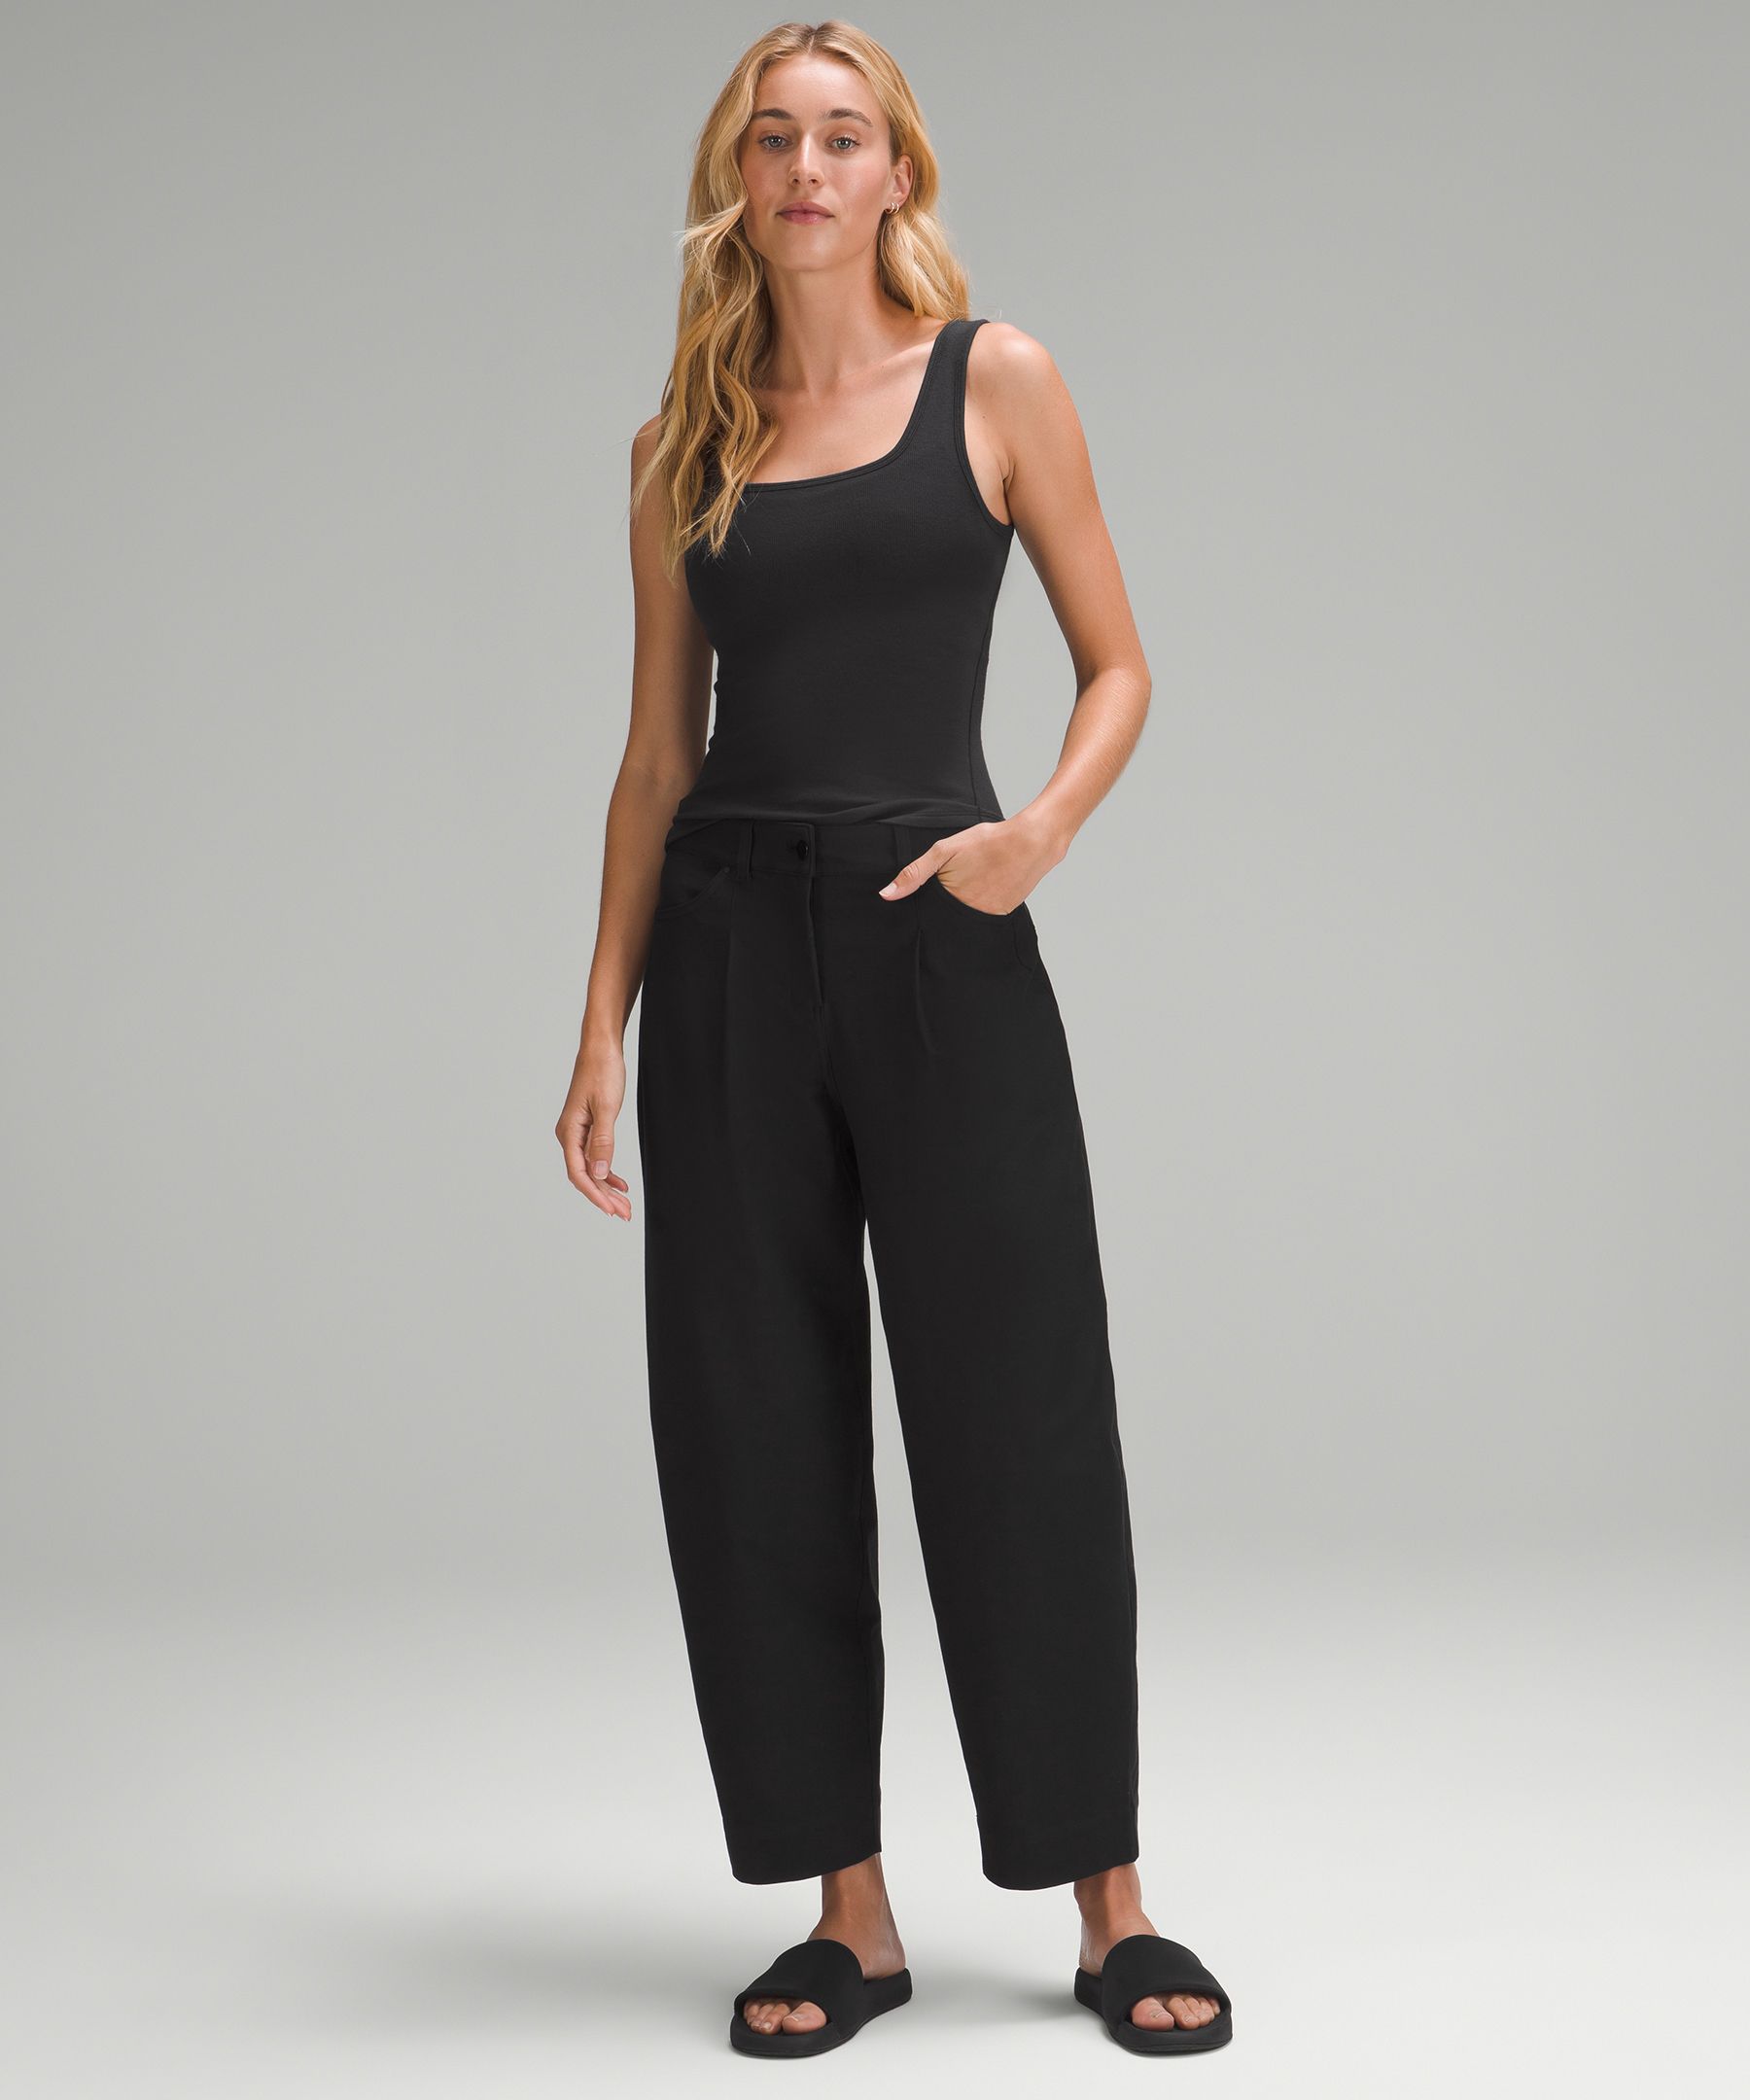 Lululemon City Sleek Pants - Brand New! - clothing & accessories